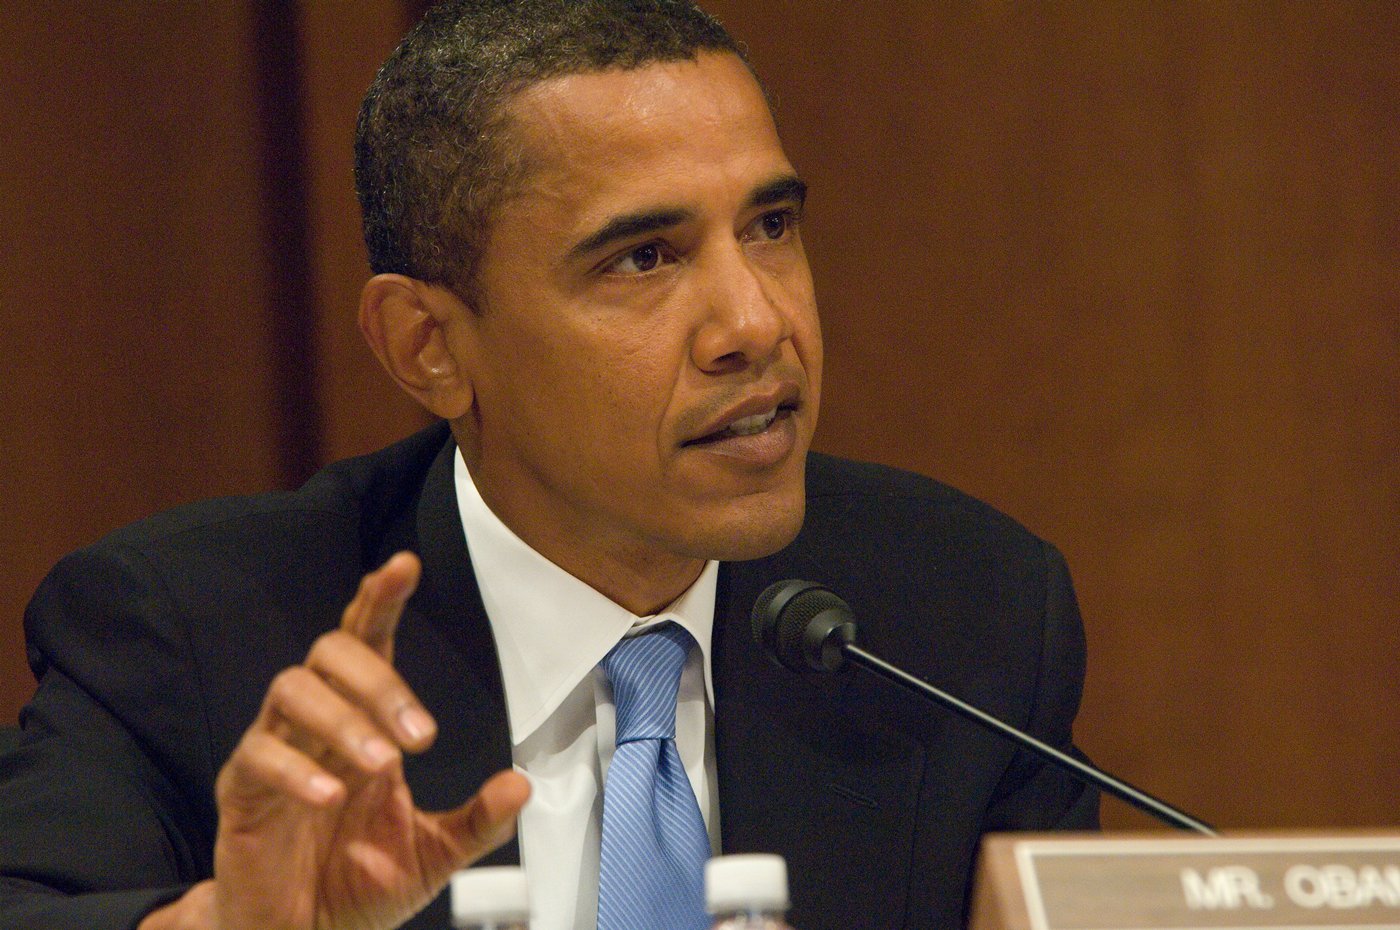 U.S Warned By Obama On Cyber Threats